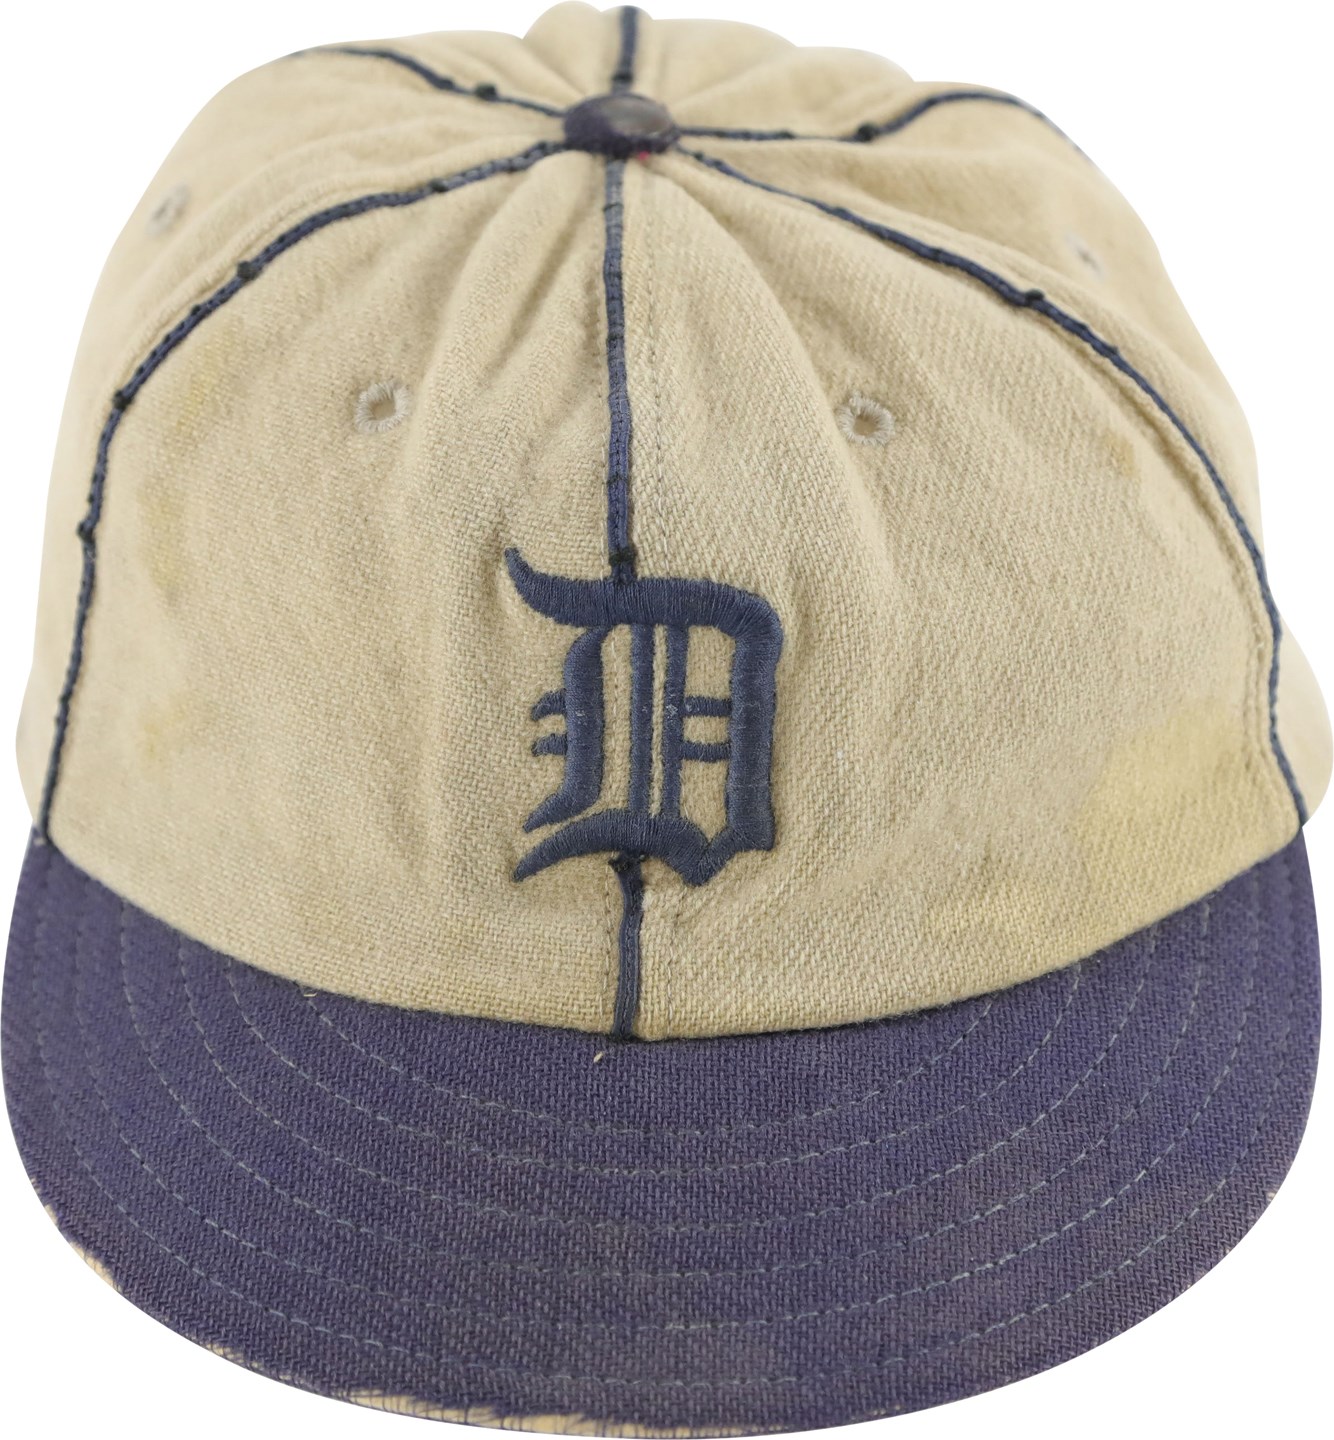 Baseball Equipment - Circa 1932 Detroit Tigers Baseball Hat